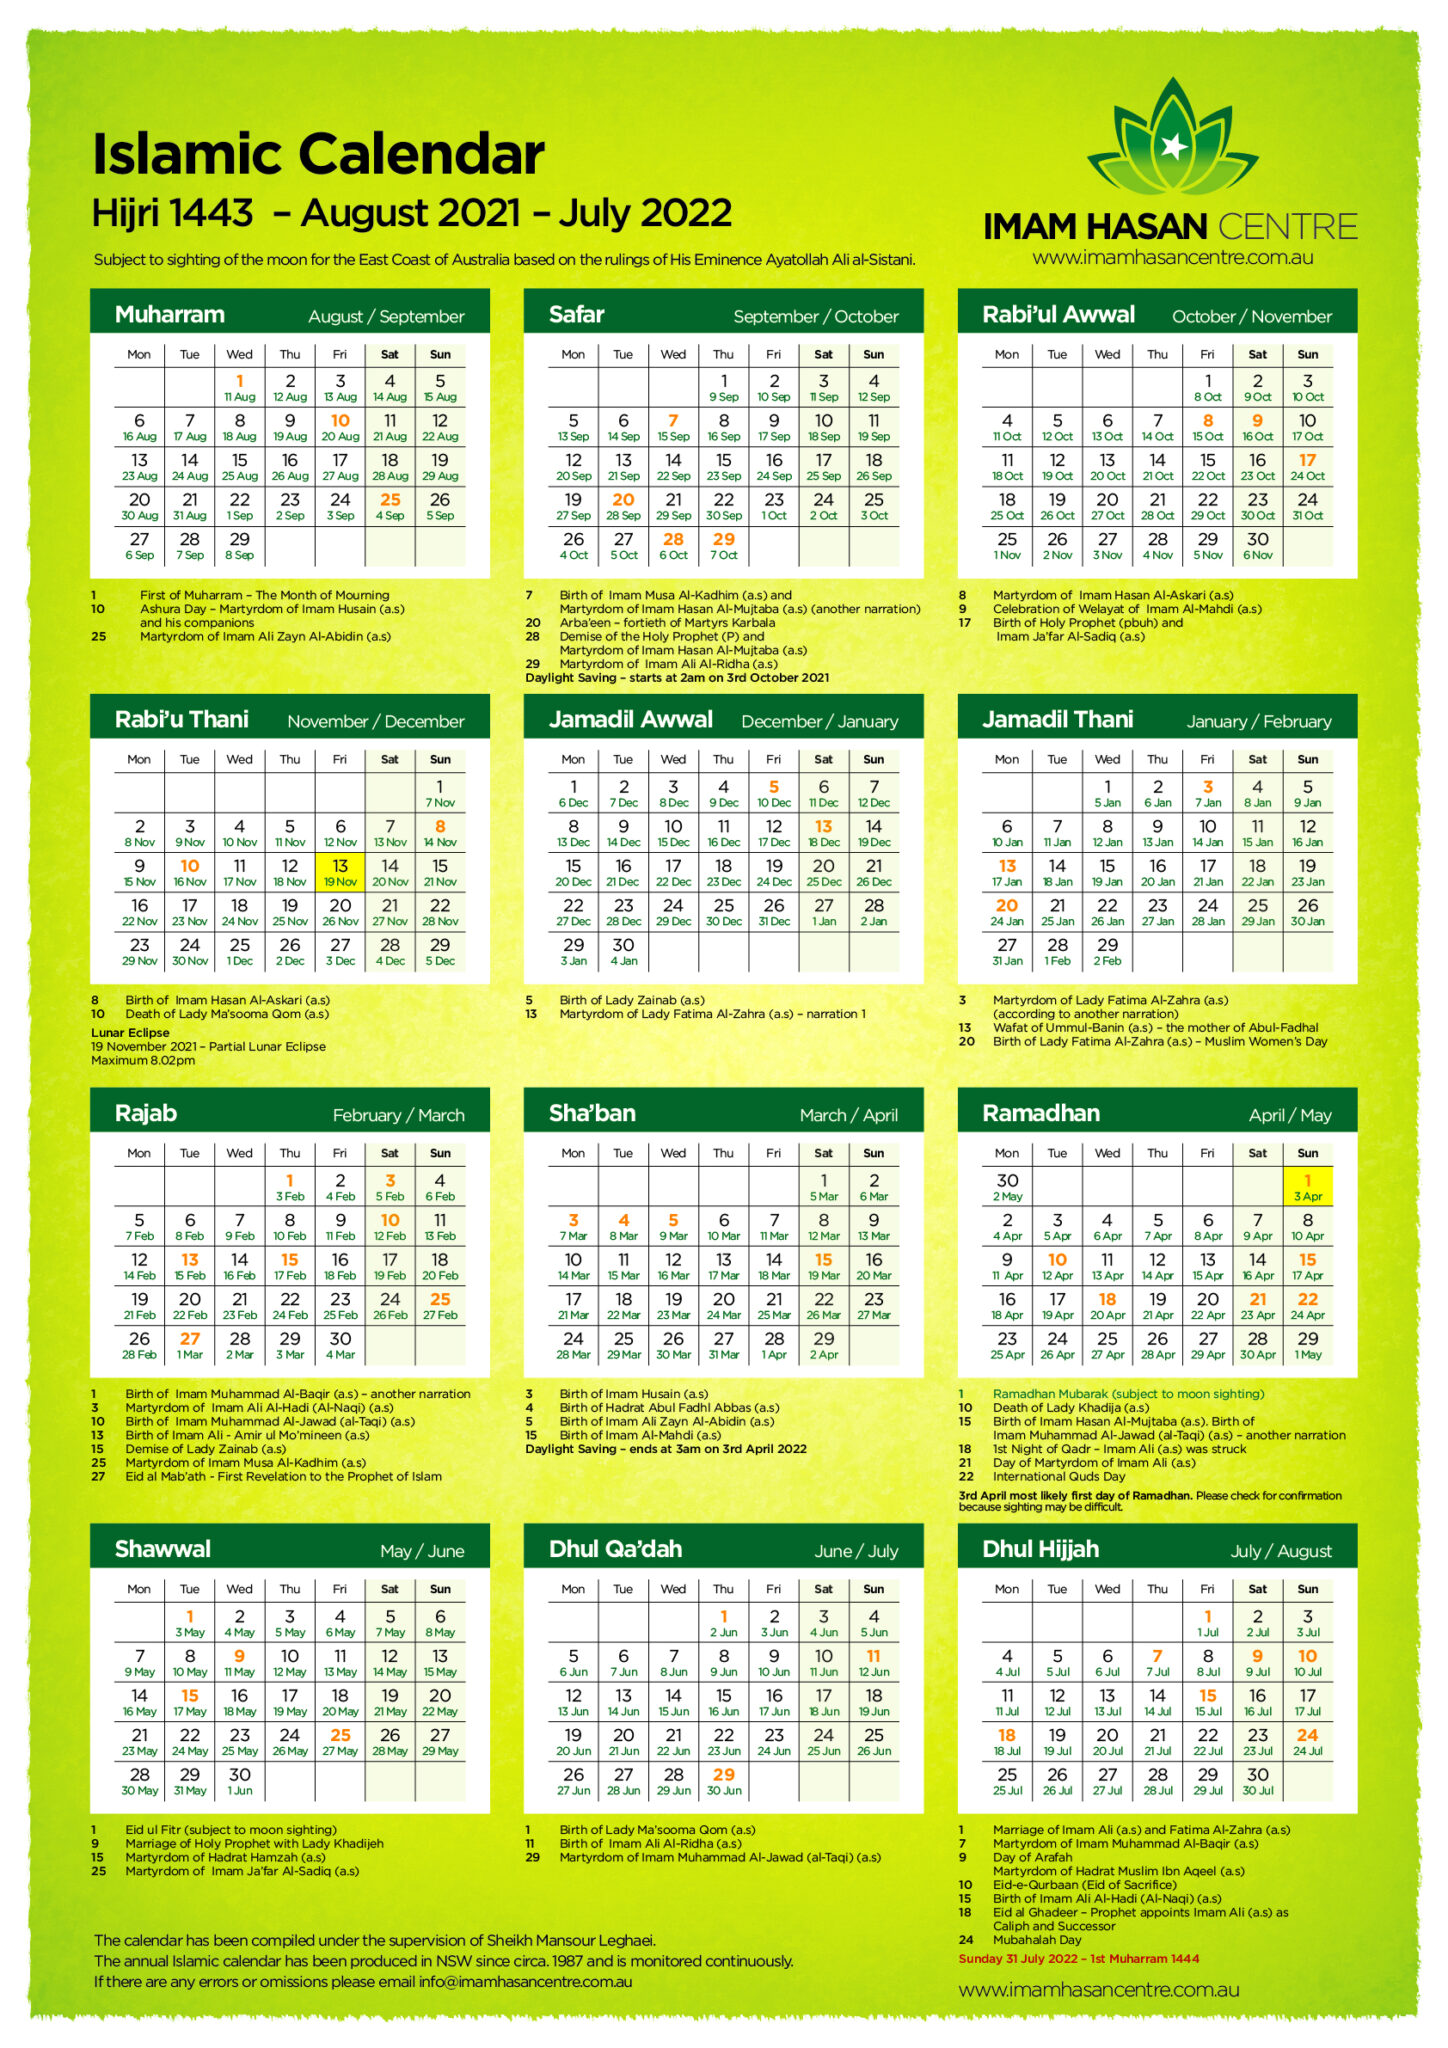 1443 HIJRI Calendar AS POSTED ON JULY 1, 2021 Imam Hasan Centre